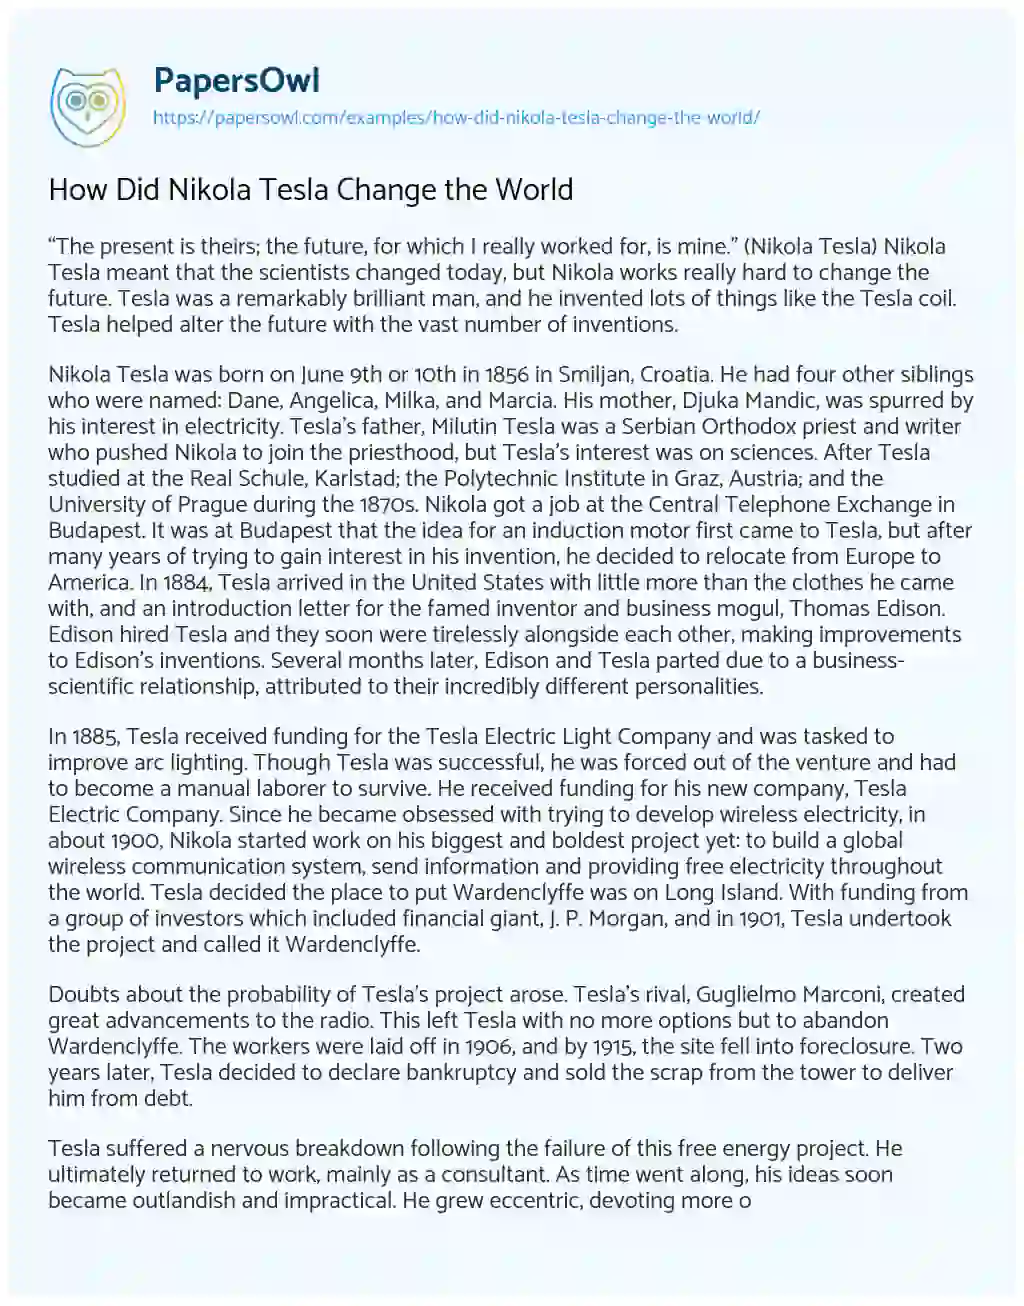 Essay on How did Nikola Tesla Change the World